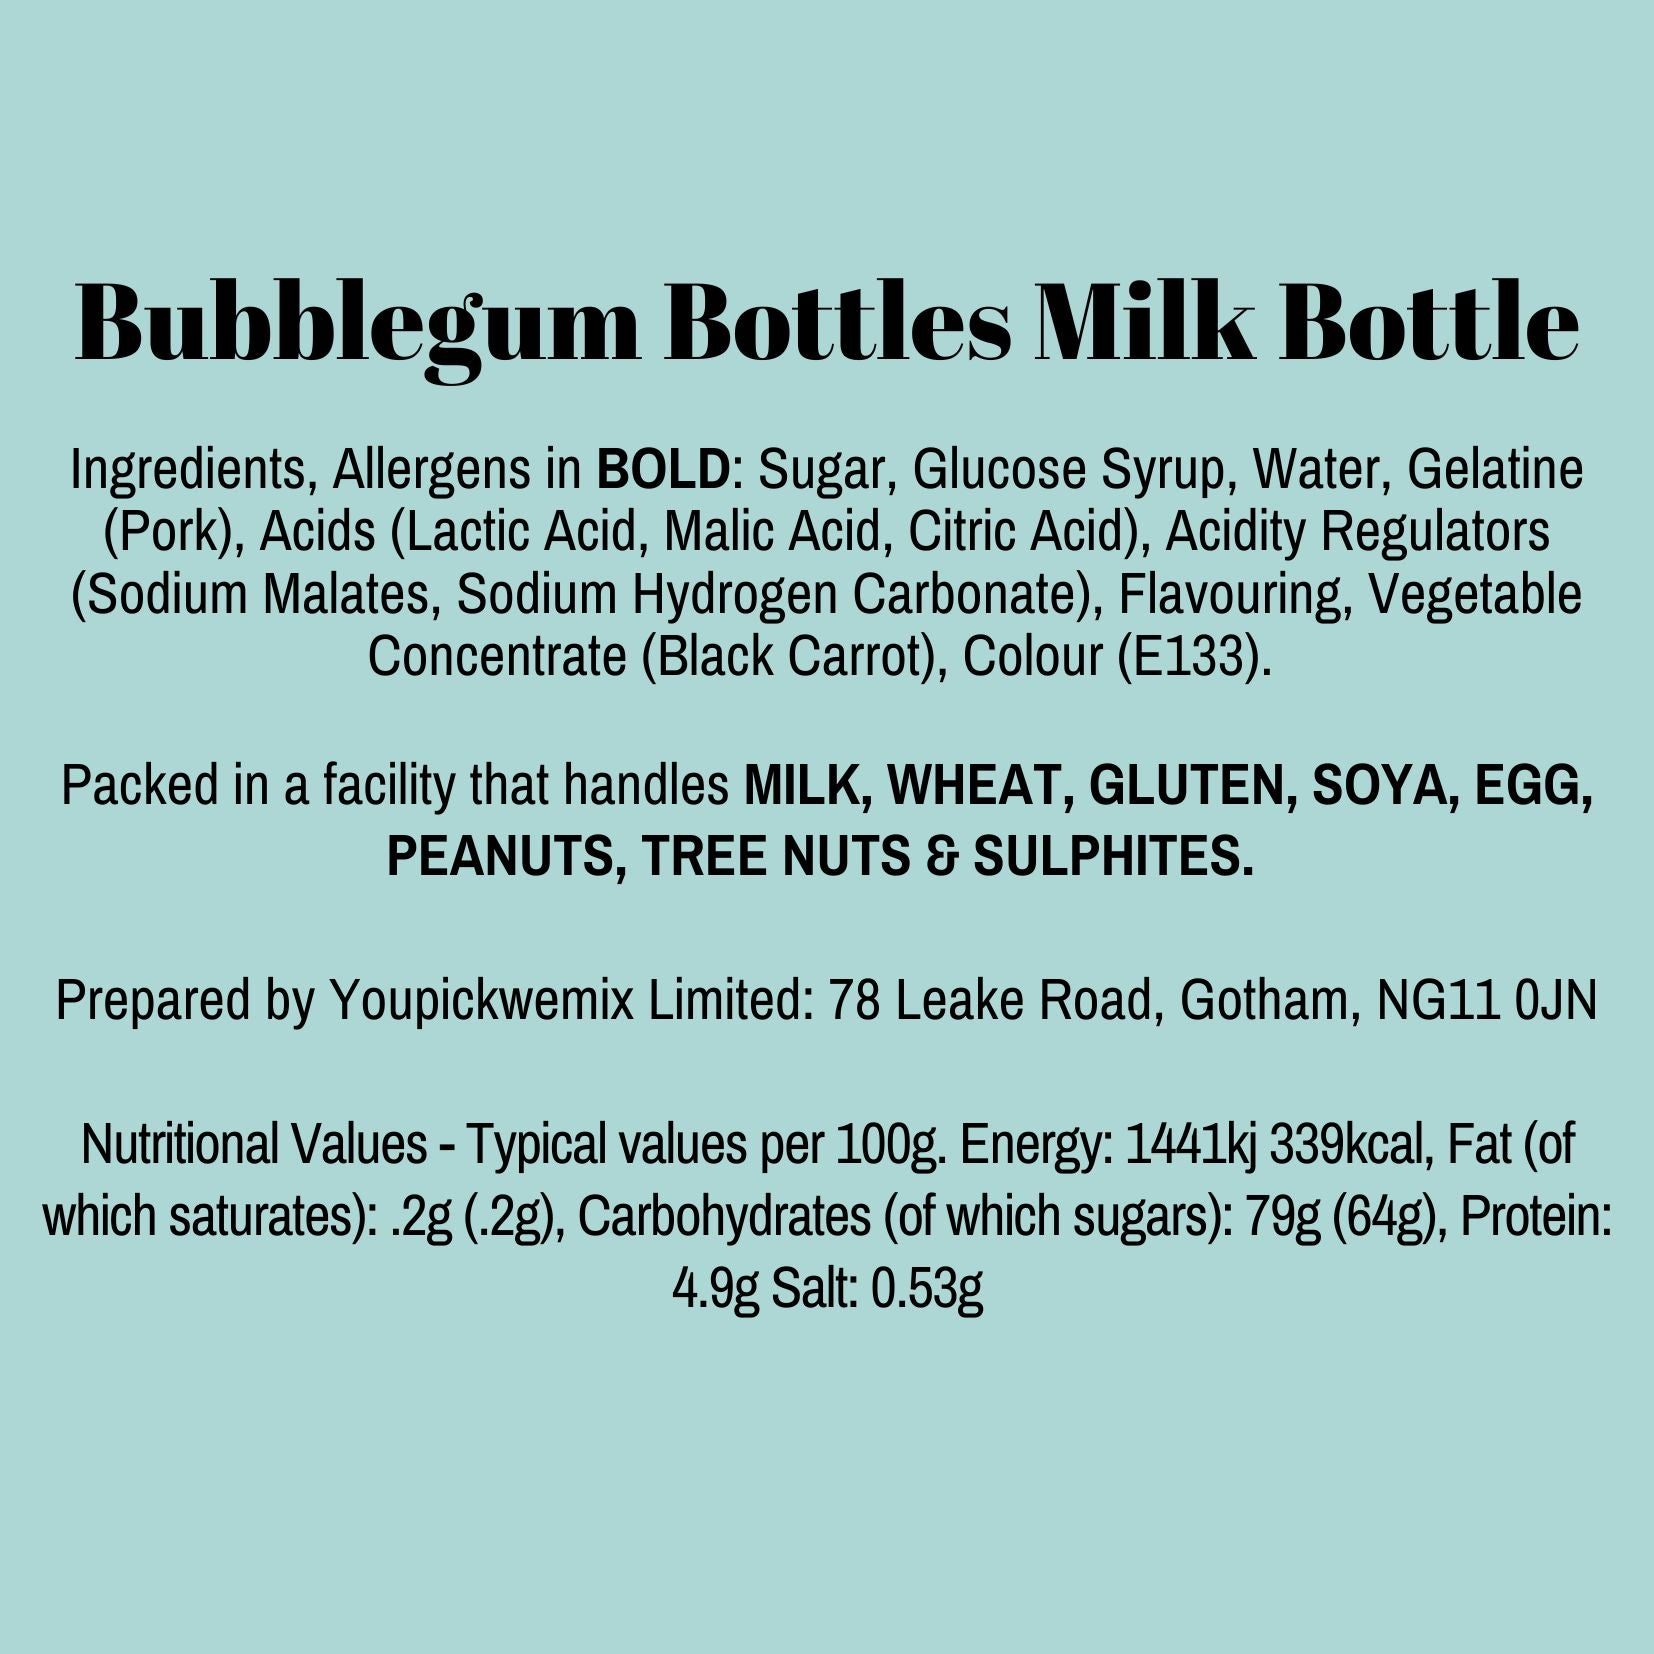 Bubblegum Bottles Milk Bottle